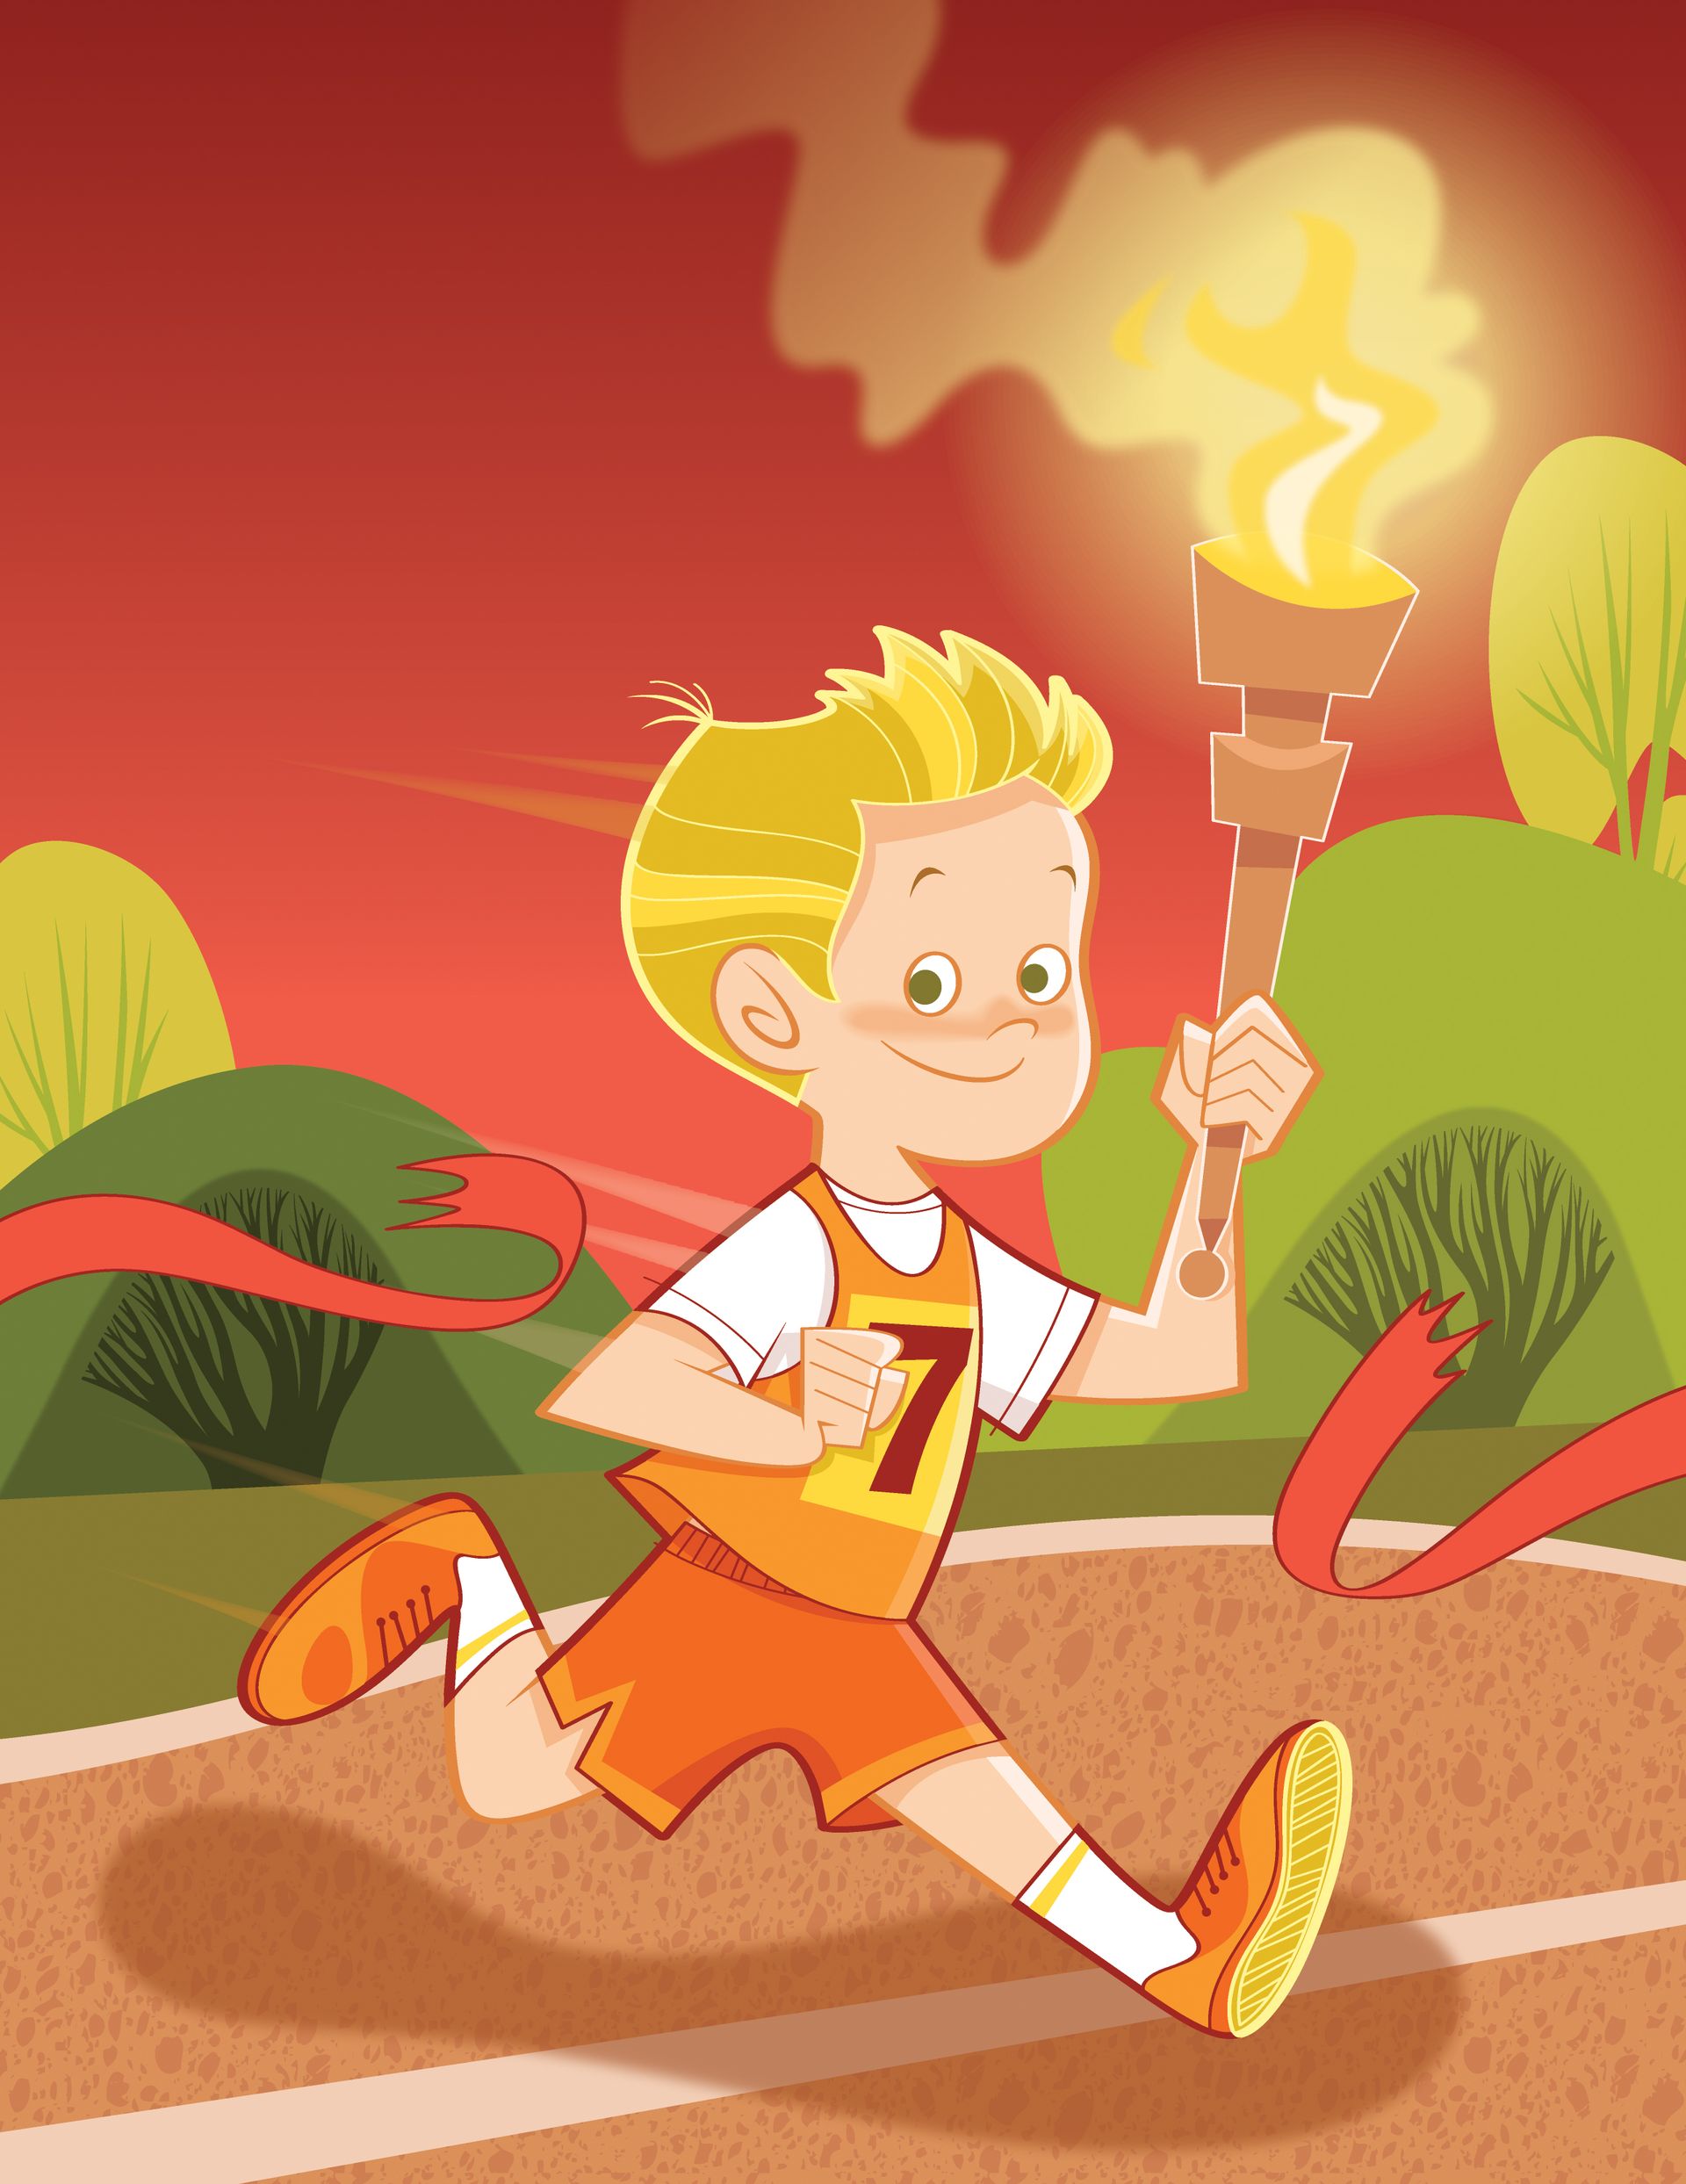 A boy runs through a red ribbon, holding an Olympic torch.